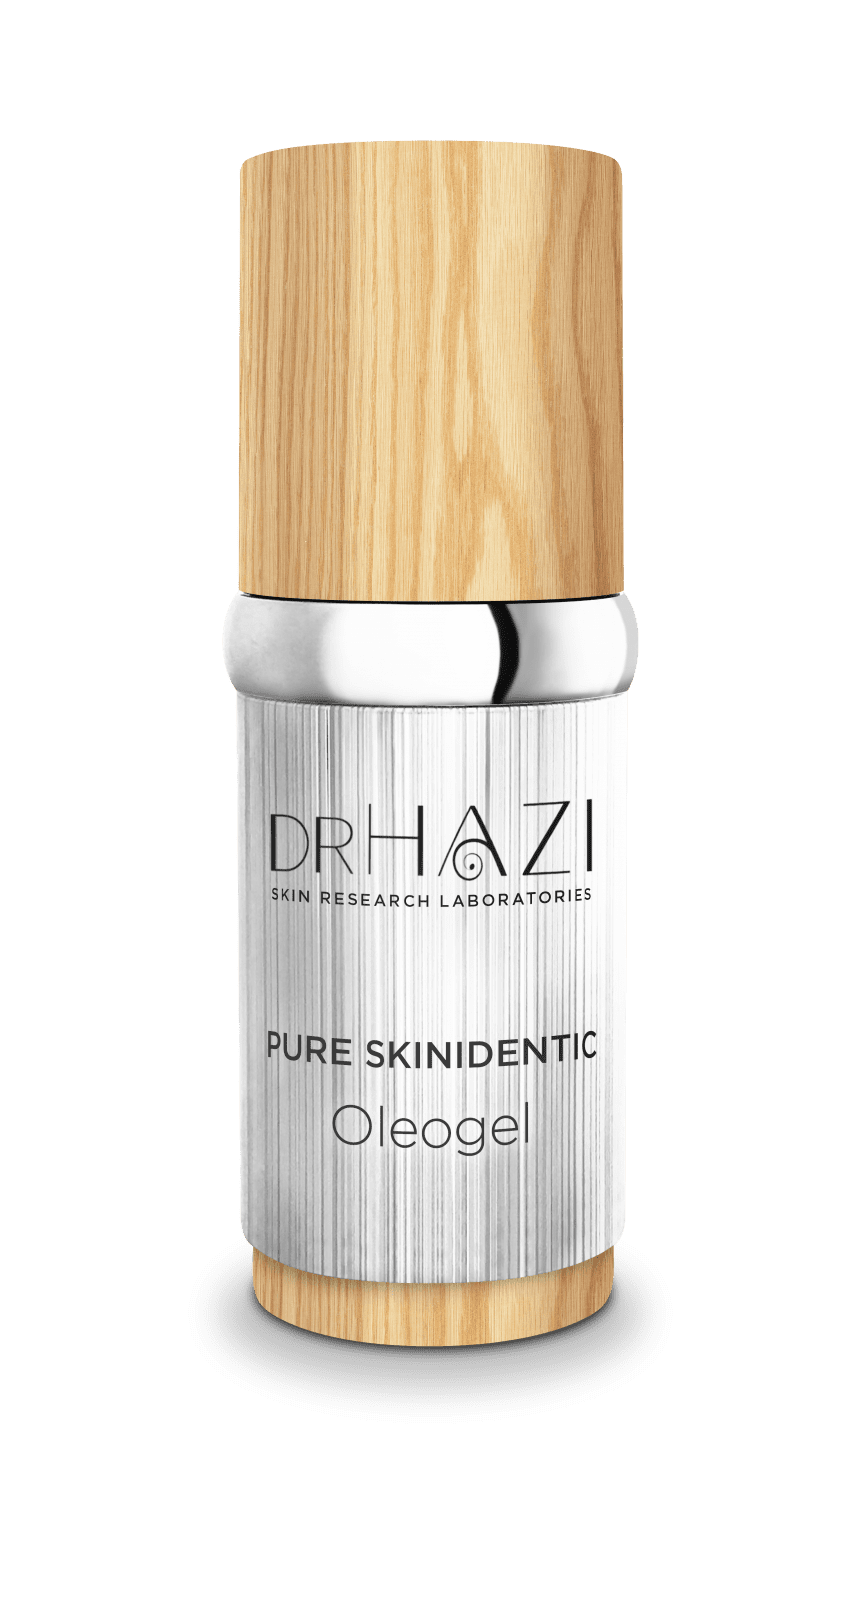 PURE - hyper sensitive skin renewal with nanopeptids Pure Skinidentic Oleogel